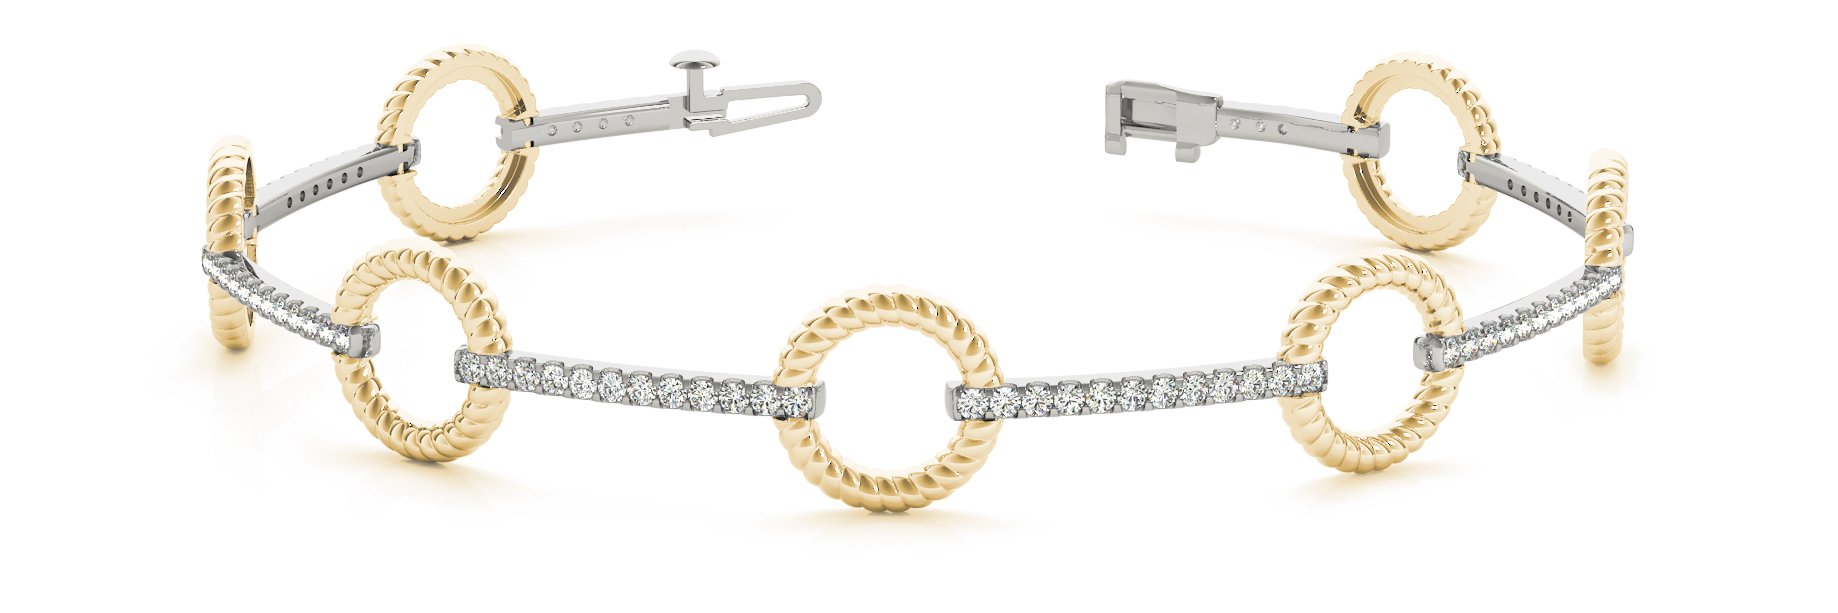 Fancy Diamond Bracelet Ladies 1.08ct tw - 14kt Yellow Gold